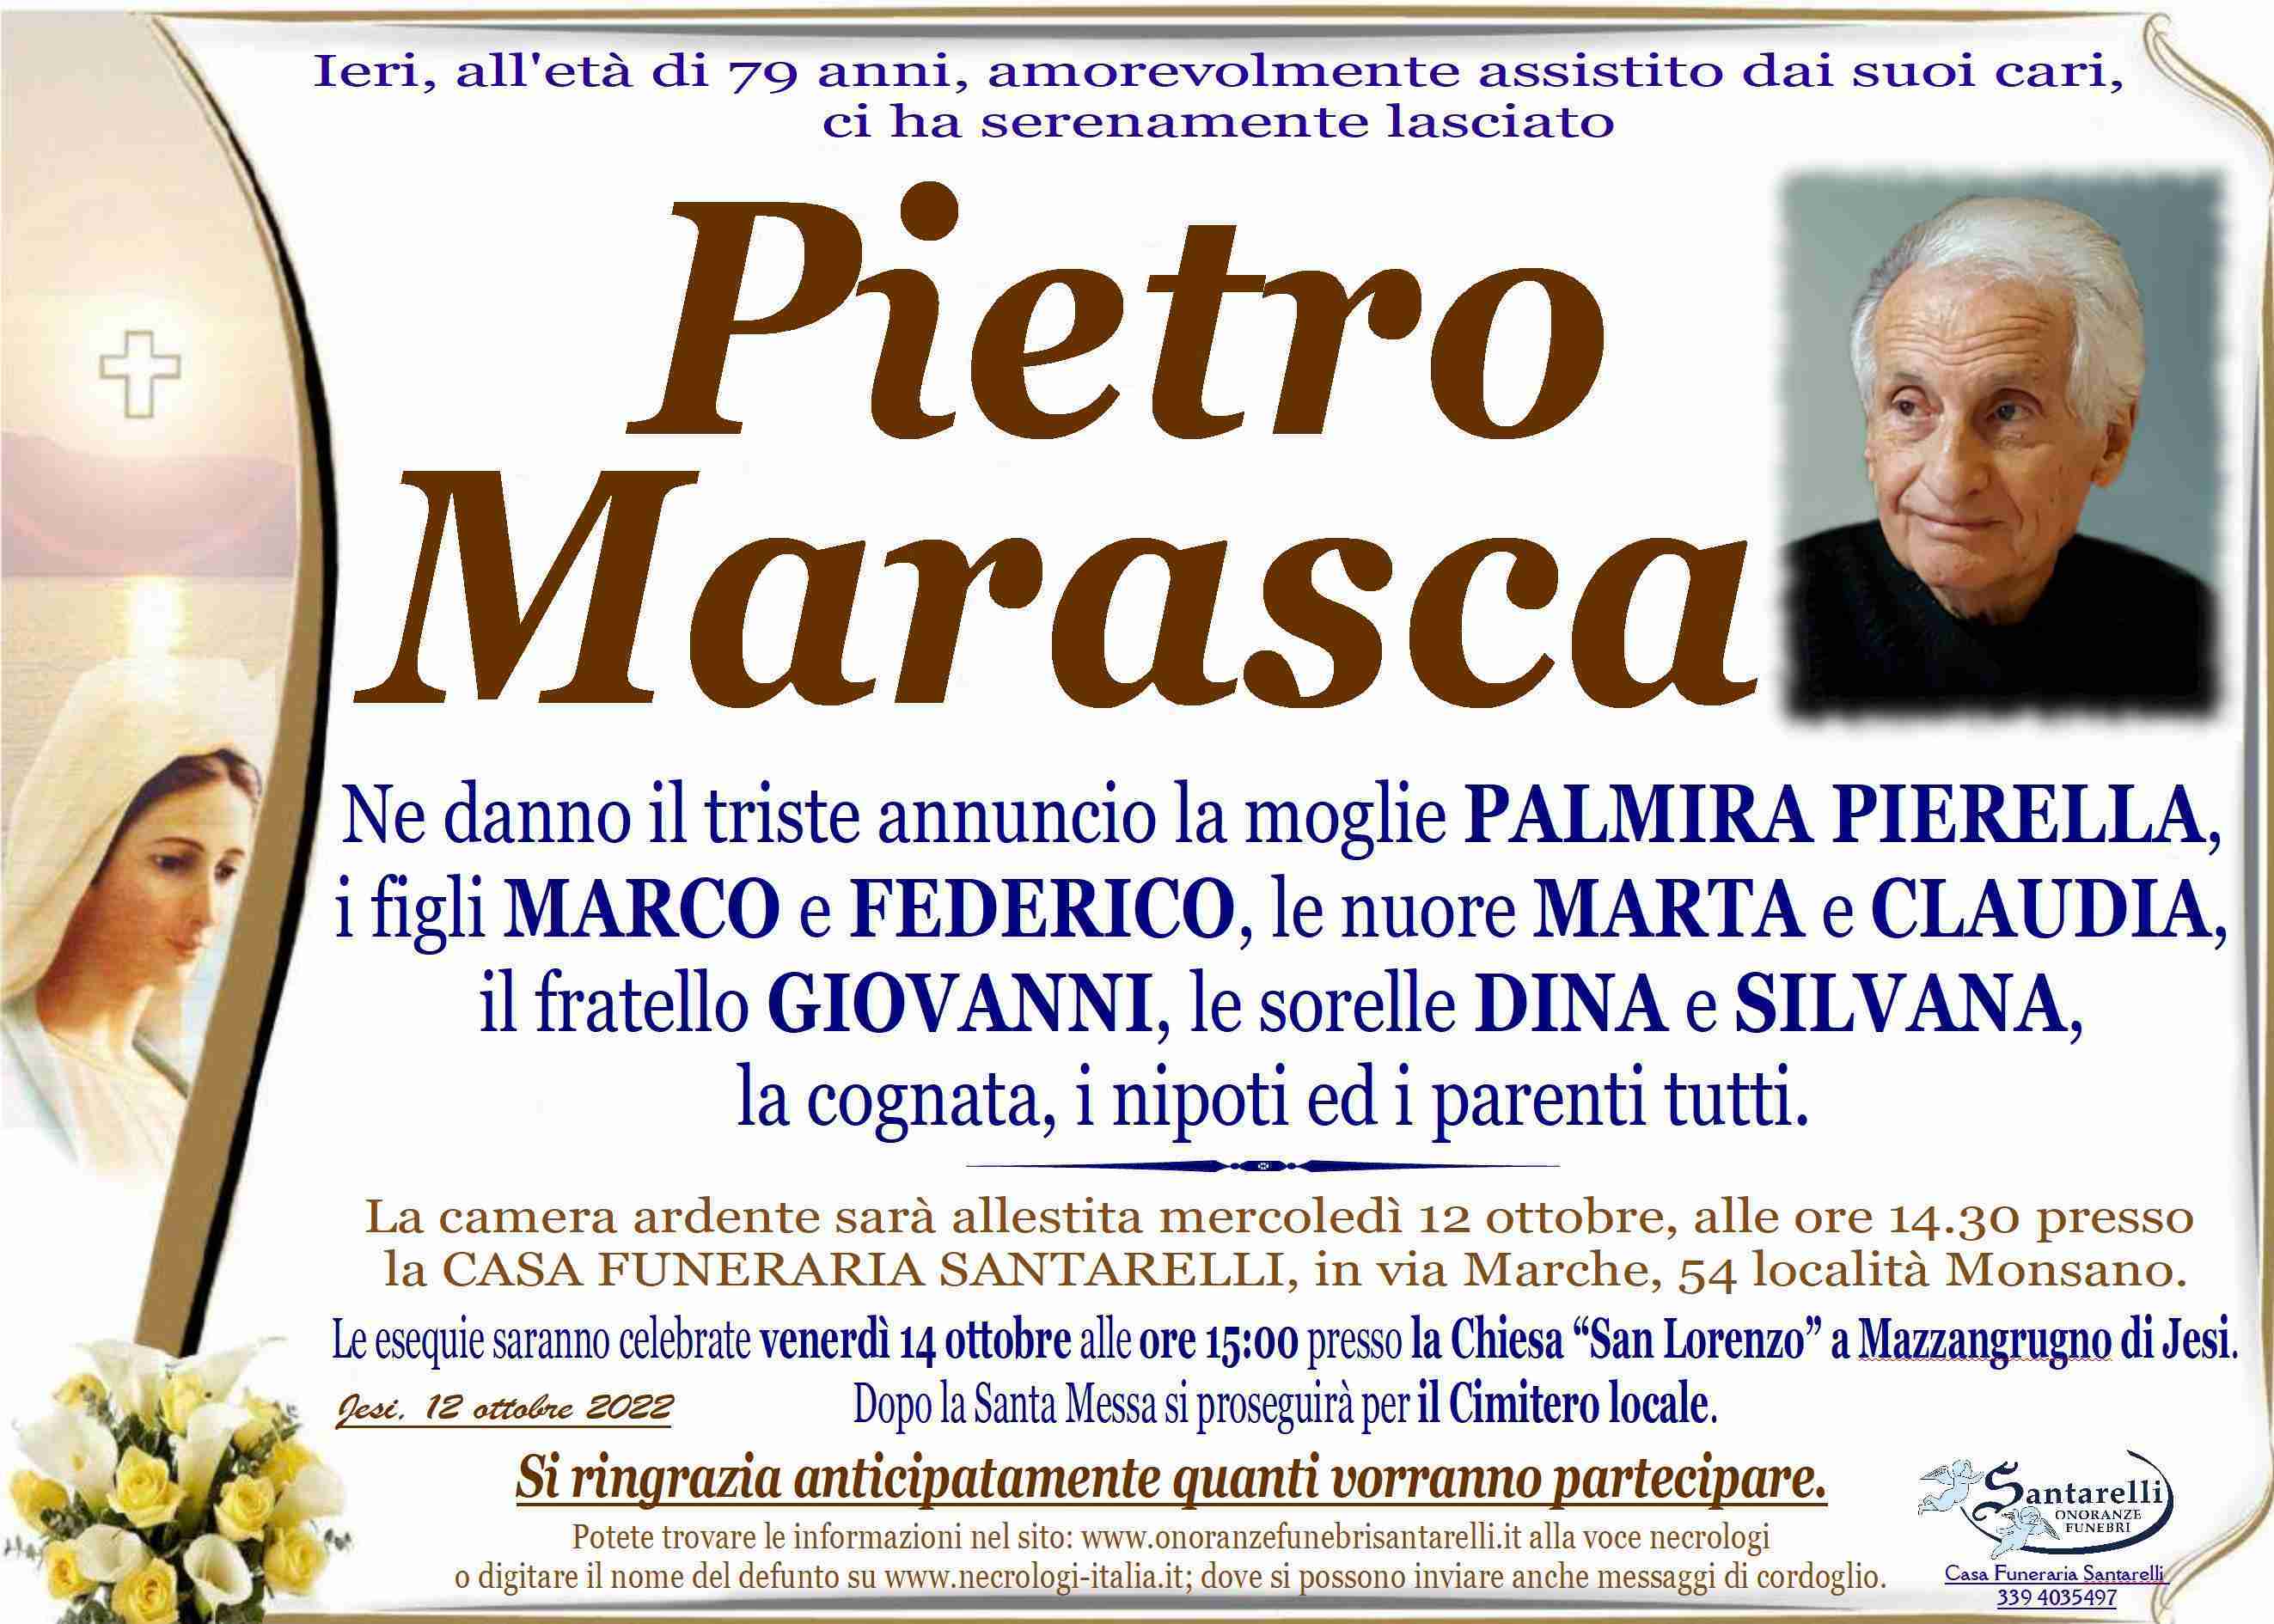 Pietro Marasca